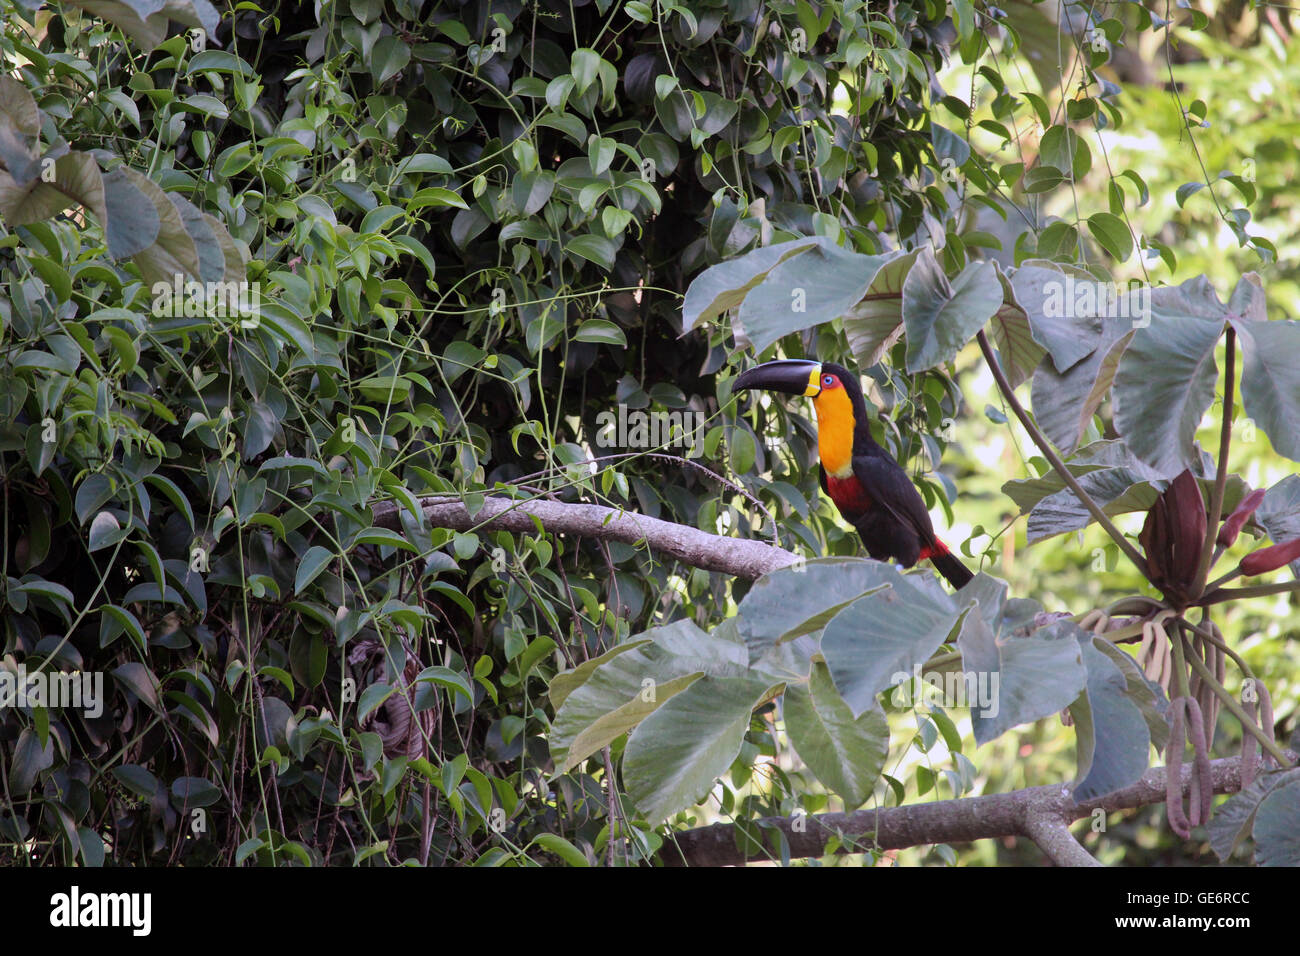 a rare bird called ramphastos toco most known in Brazil as Tucano Carioca Stock Photo